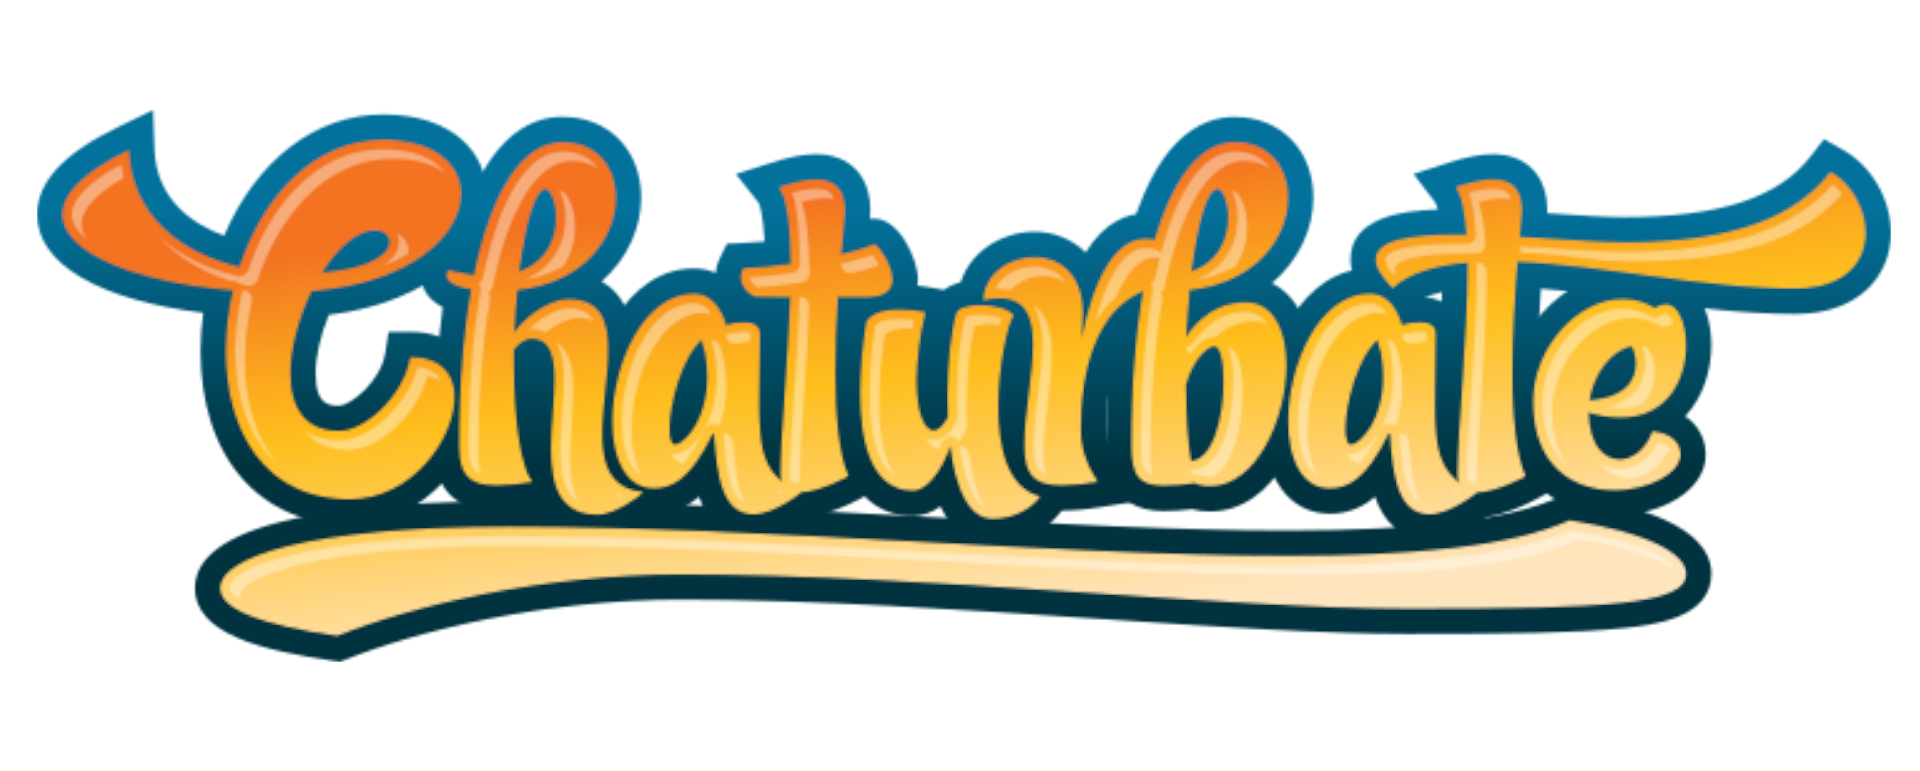 Chaturbate bds